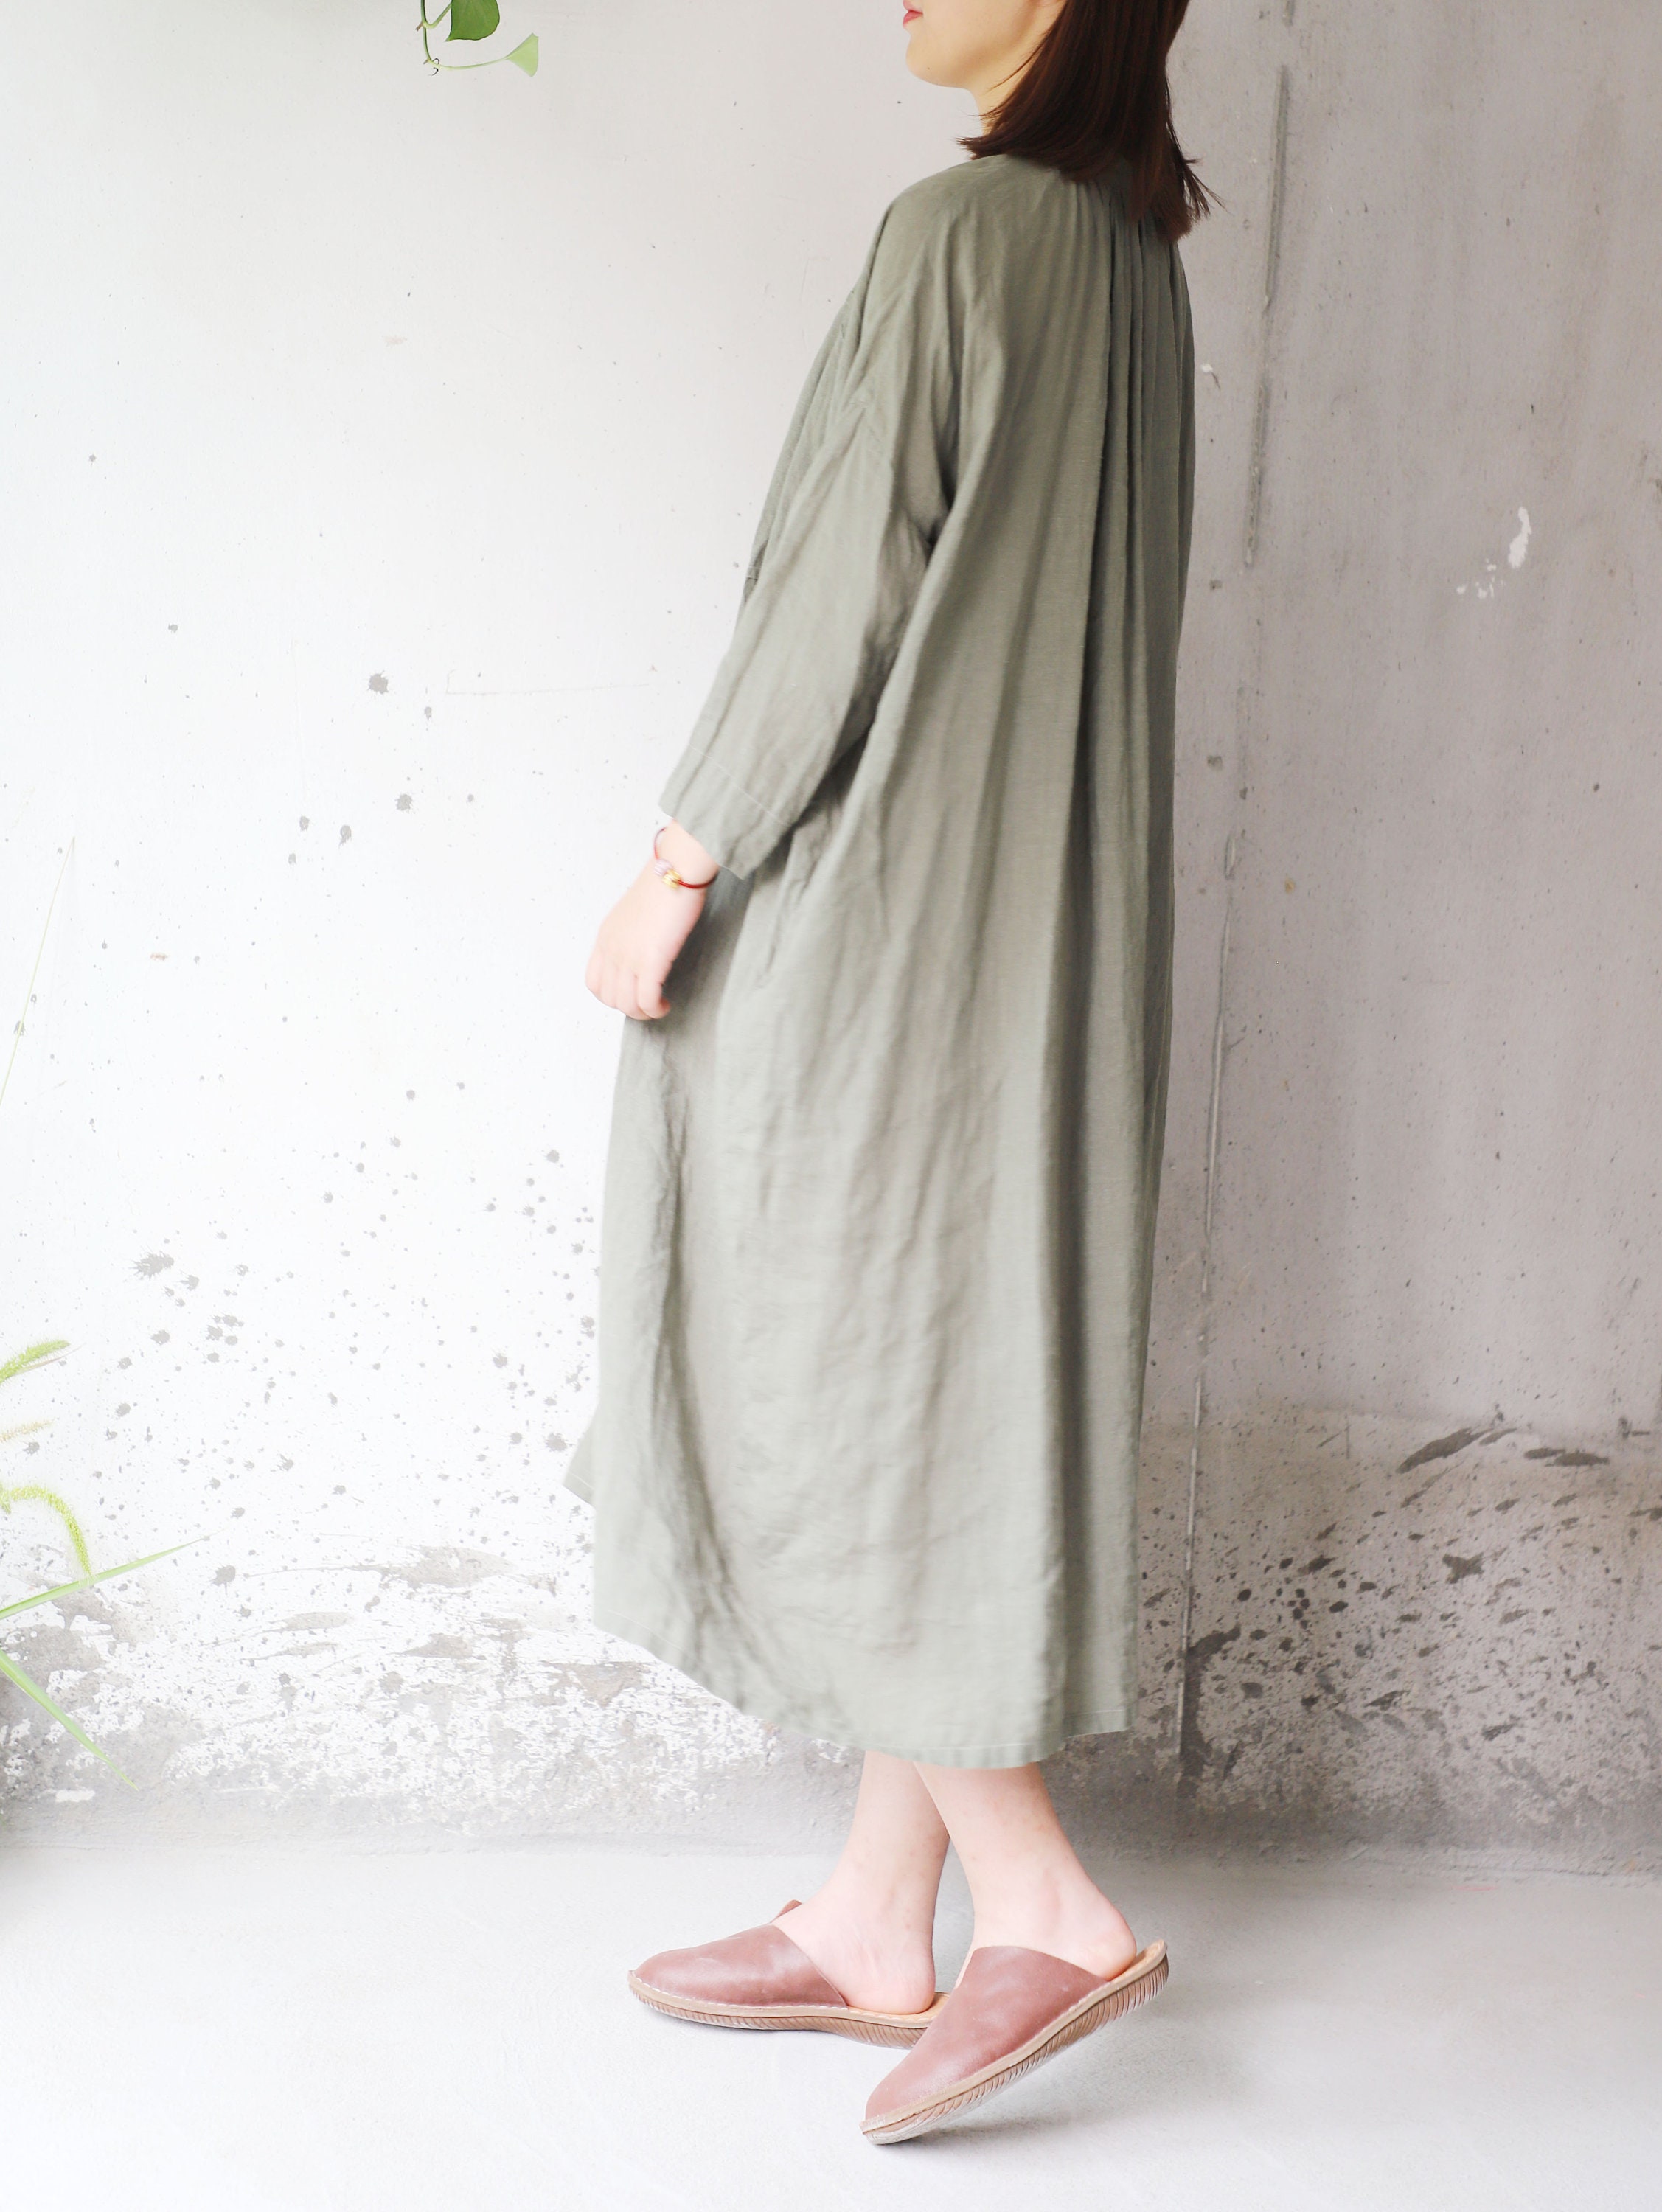 Z111washed Linen Shirtdress Long Shirt / Dress Avocado | Etsy